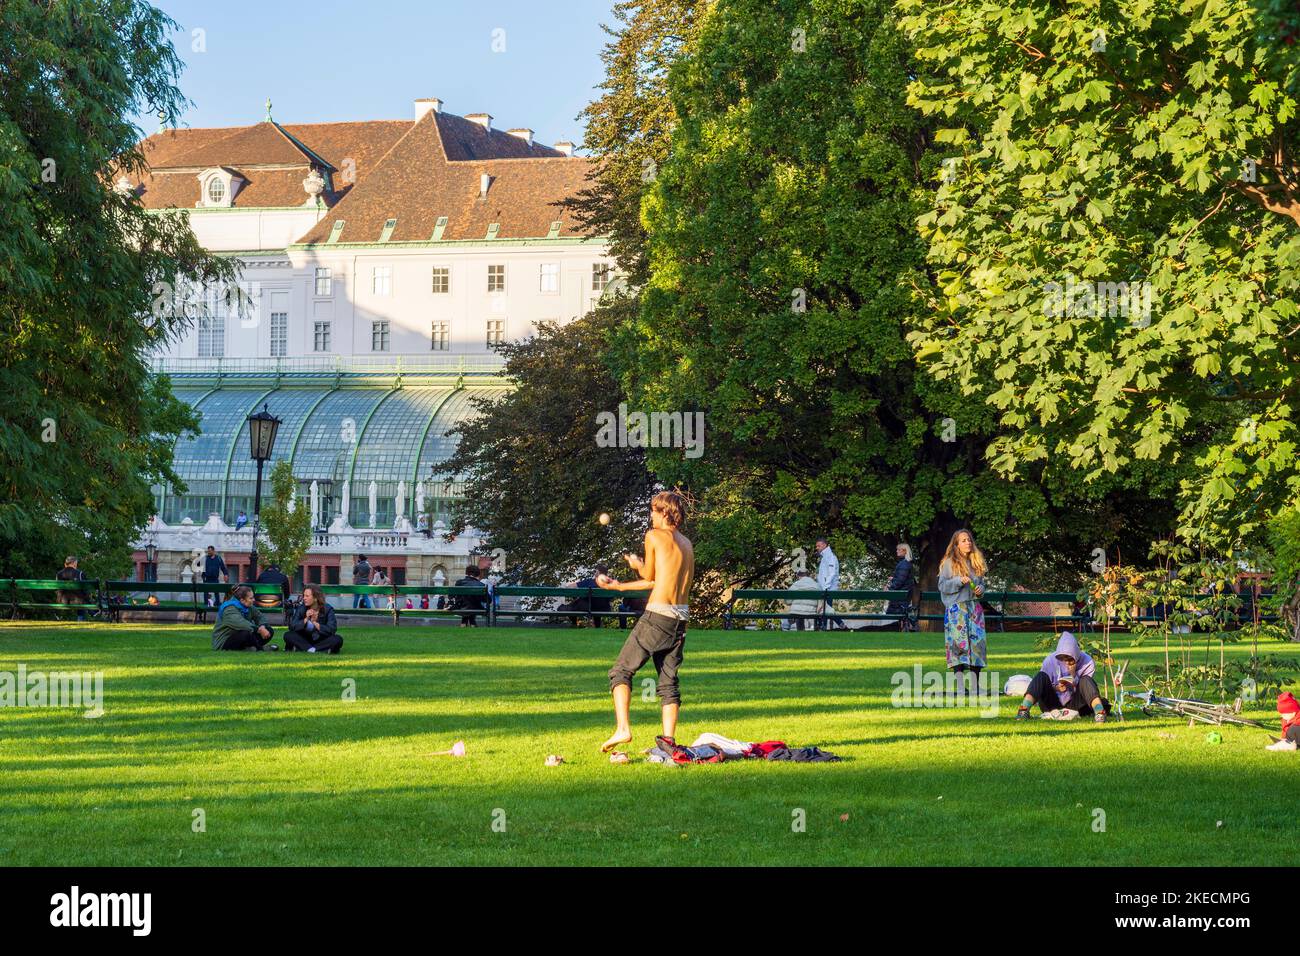 Vienna, park Burggarten, house Palmenhaus, juggler, people on meadow in 01. Old Town, Wien, Austria Stock Photo